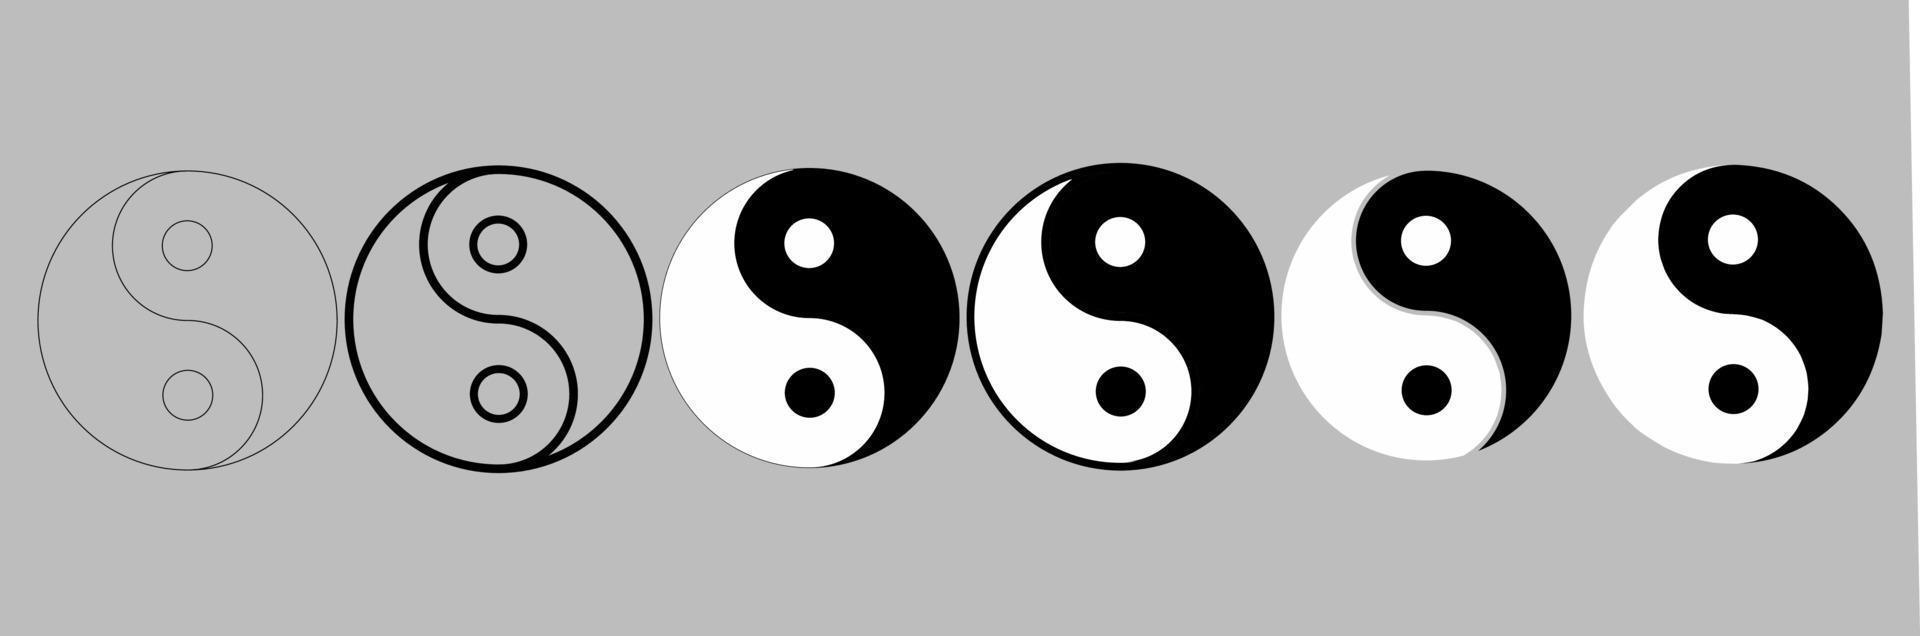 Yin-Yang- oder Jin-Jang-Symbolsatz vektor